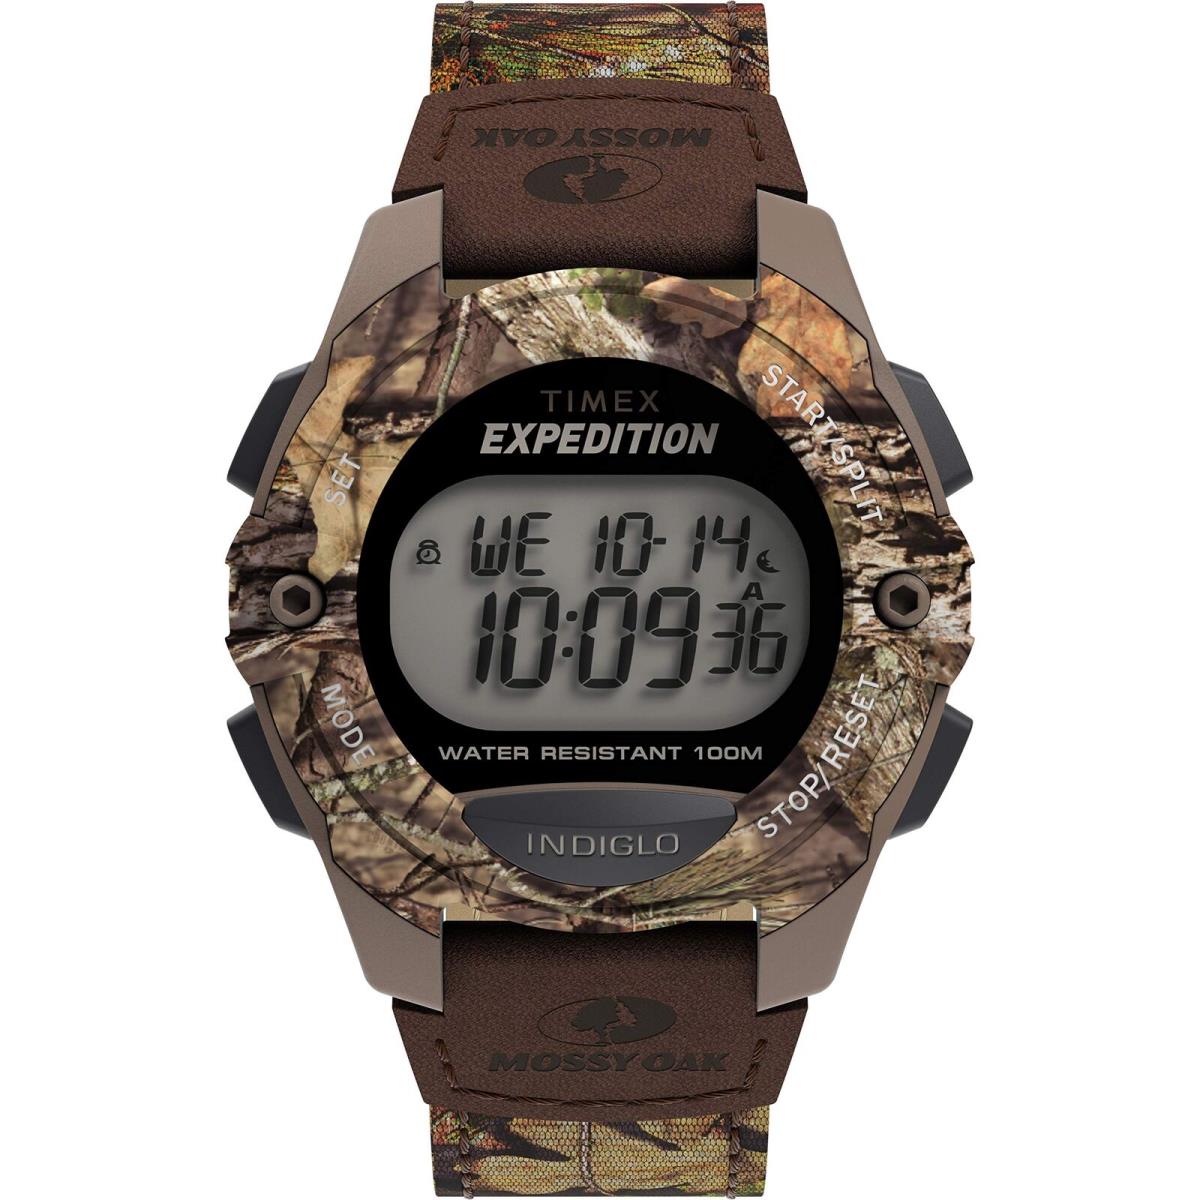 Timex TW4B19500 Expedition Digital Chrono Alarm Timer 39mm Watch - Camo Dial, Camo Band, Camo Bezel